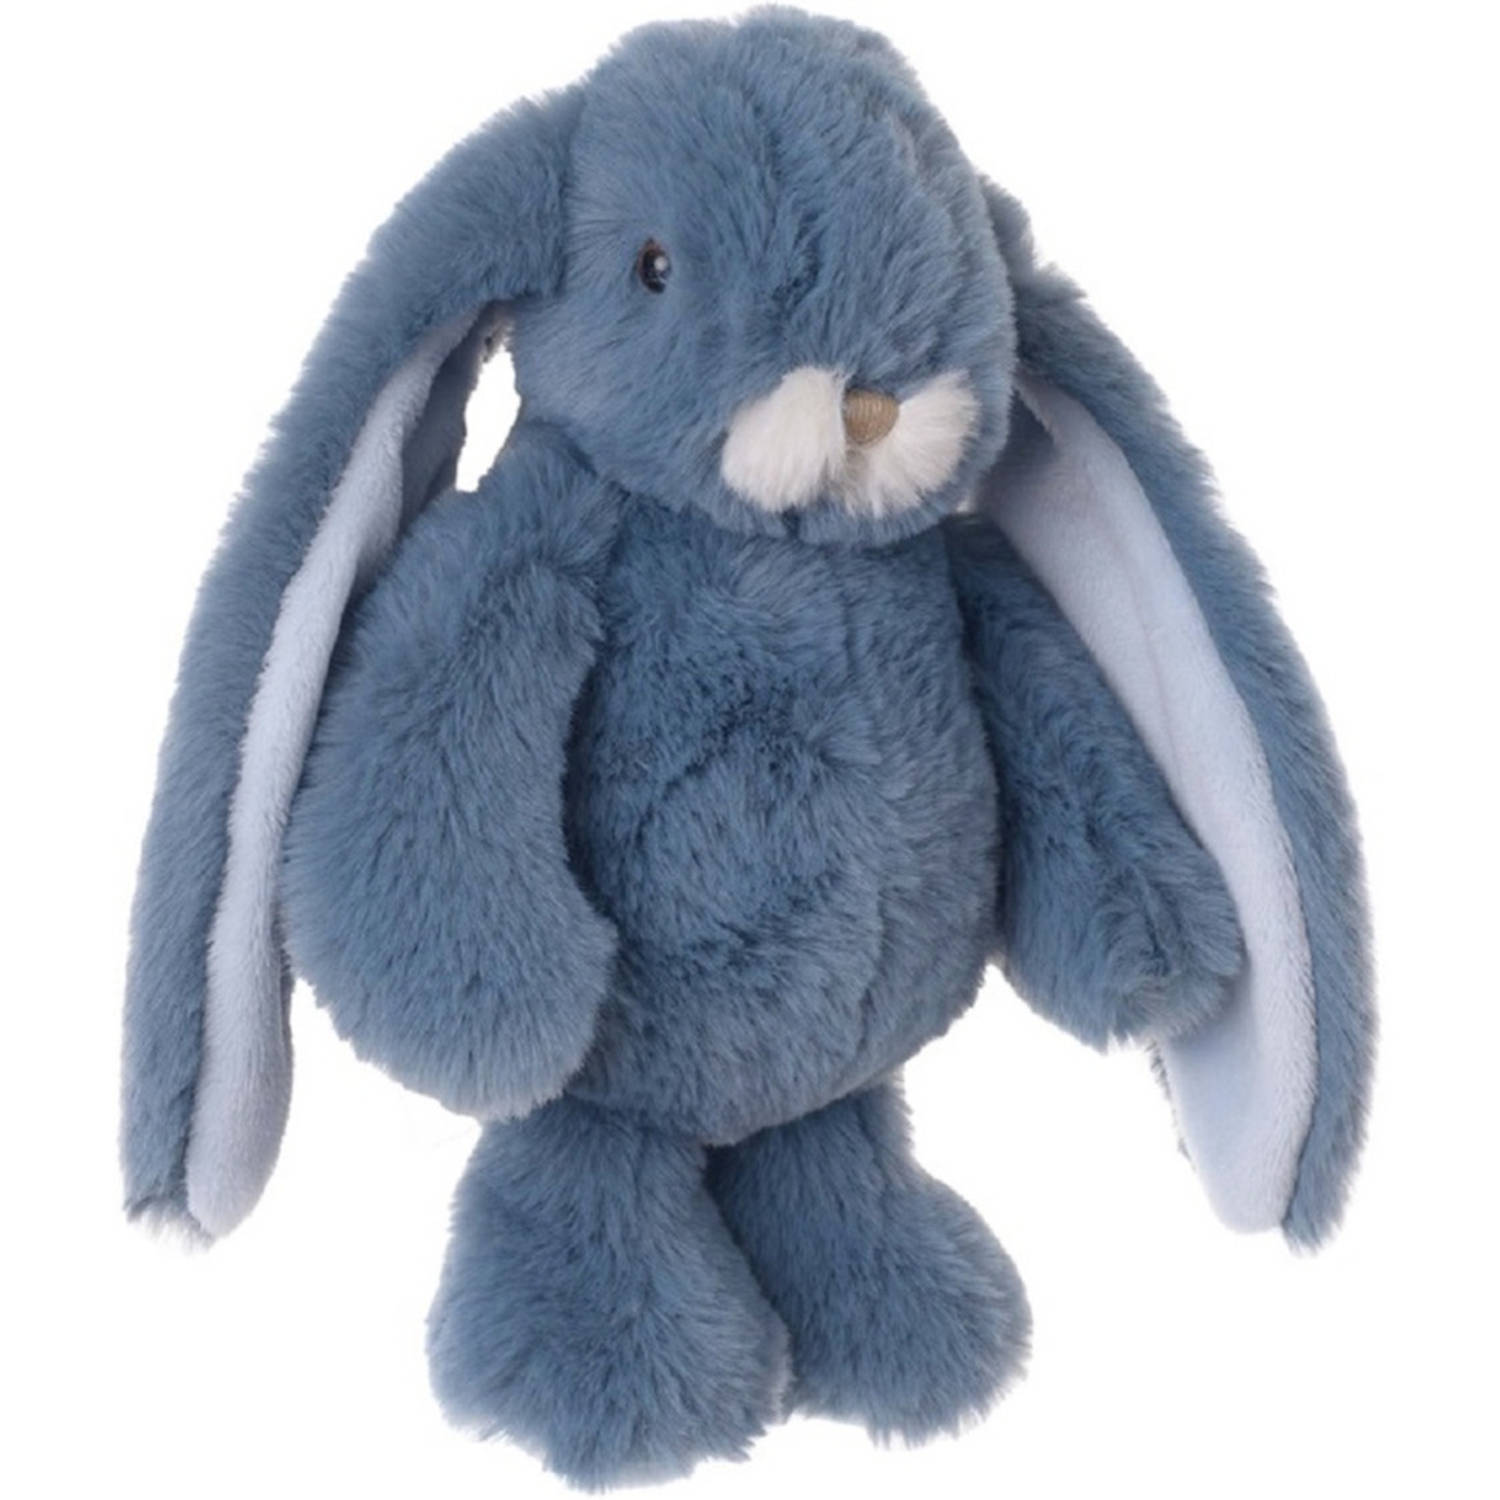 Bukowski pluche konijn knuffeldier - blauw - staand - 22 cm - Luxe kwaliteit knuffels